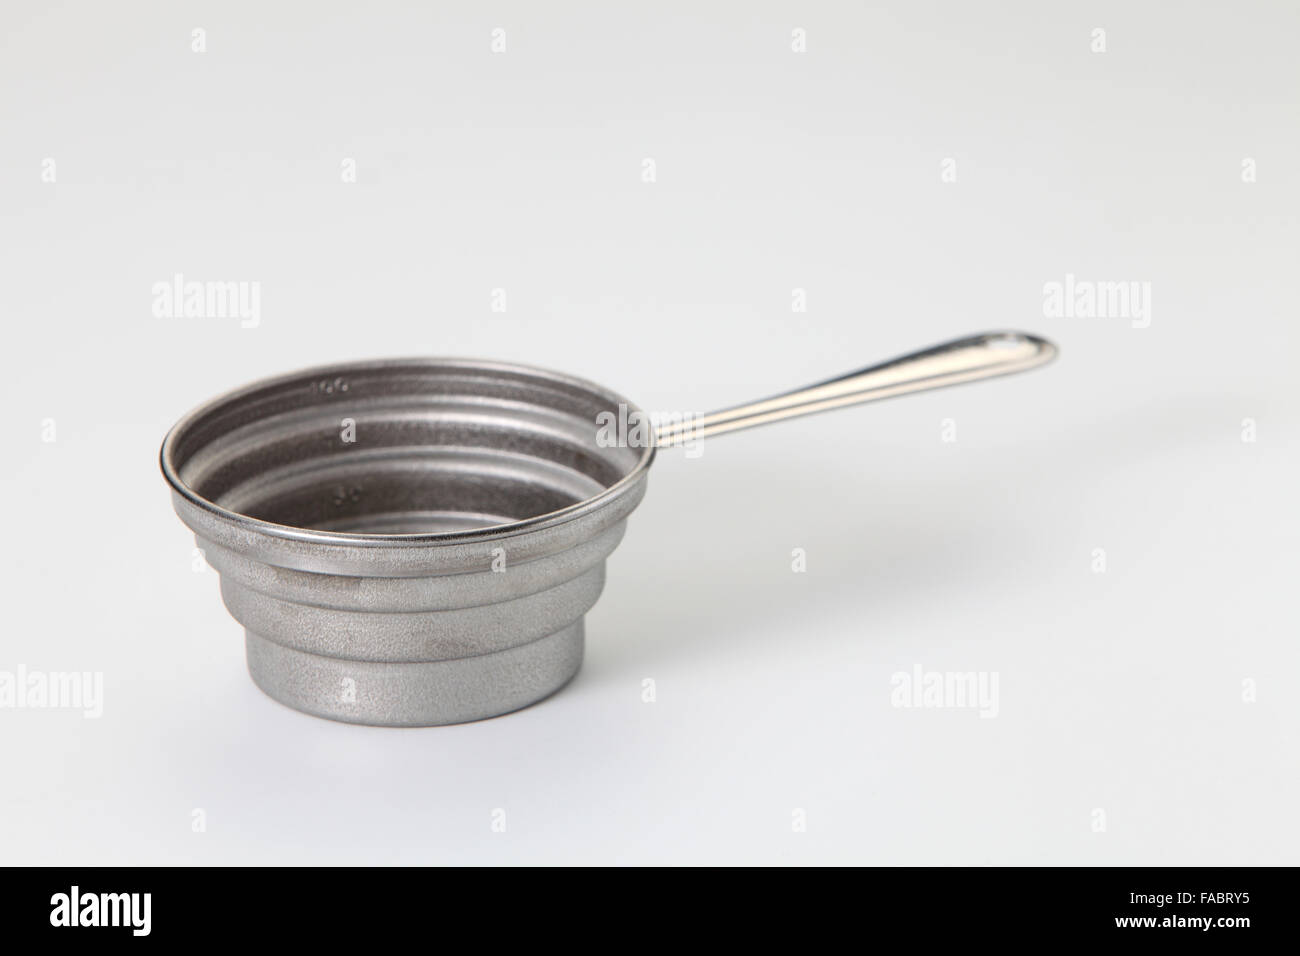 baking utensil with measurement marking Stock Photo